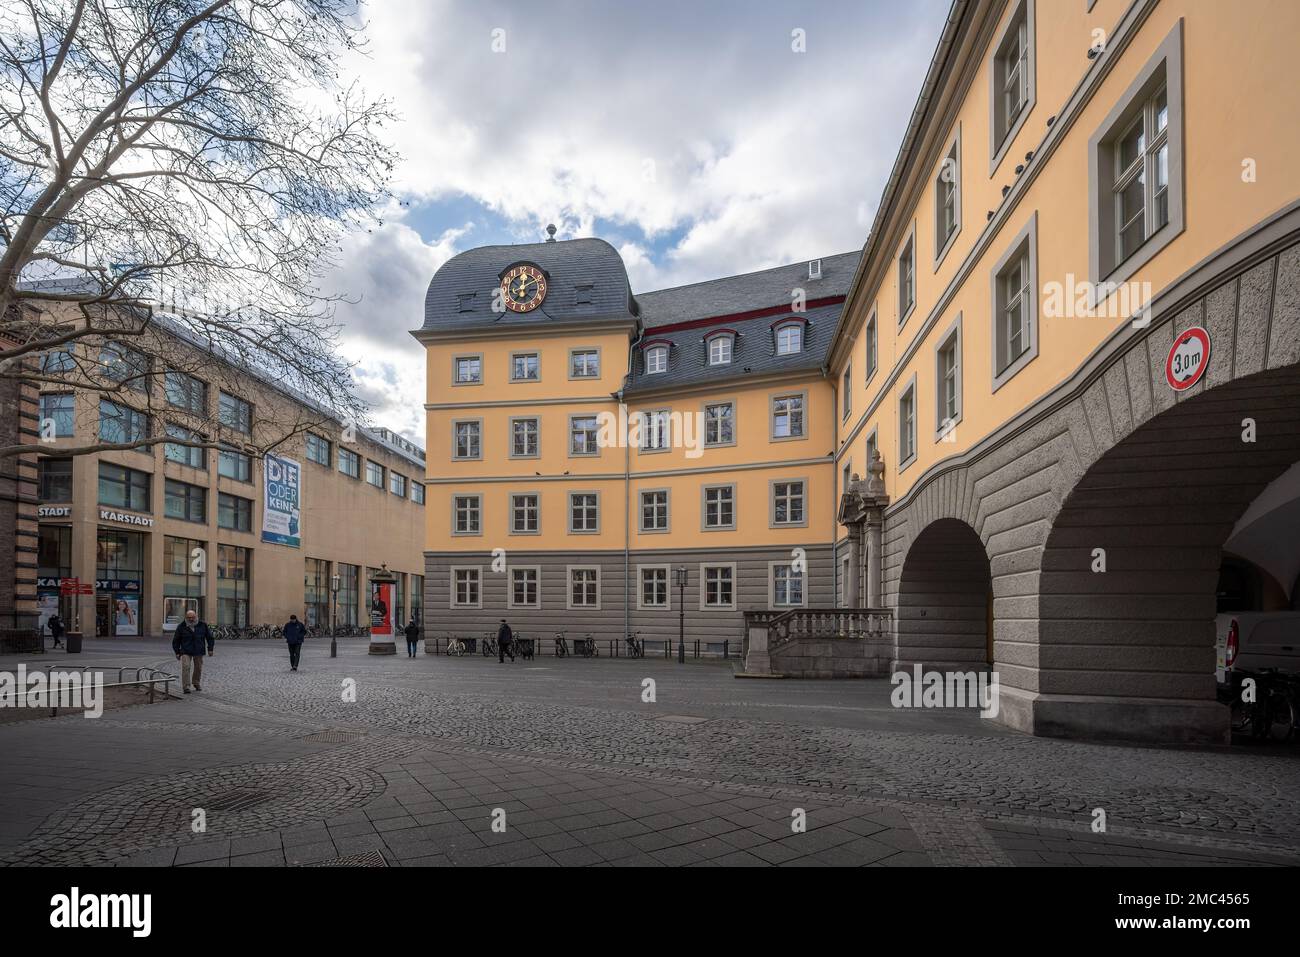 Altes Stadthaus ex edificio amministrativo - Bonn, Germania Foto Stock